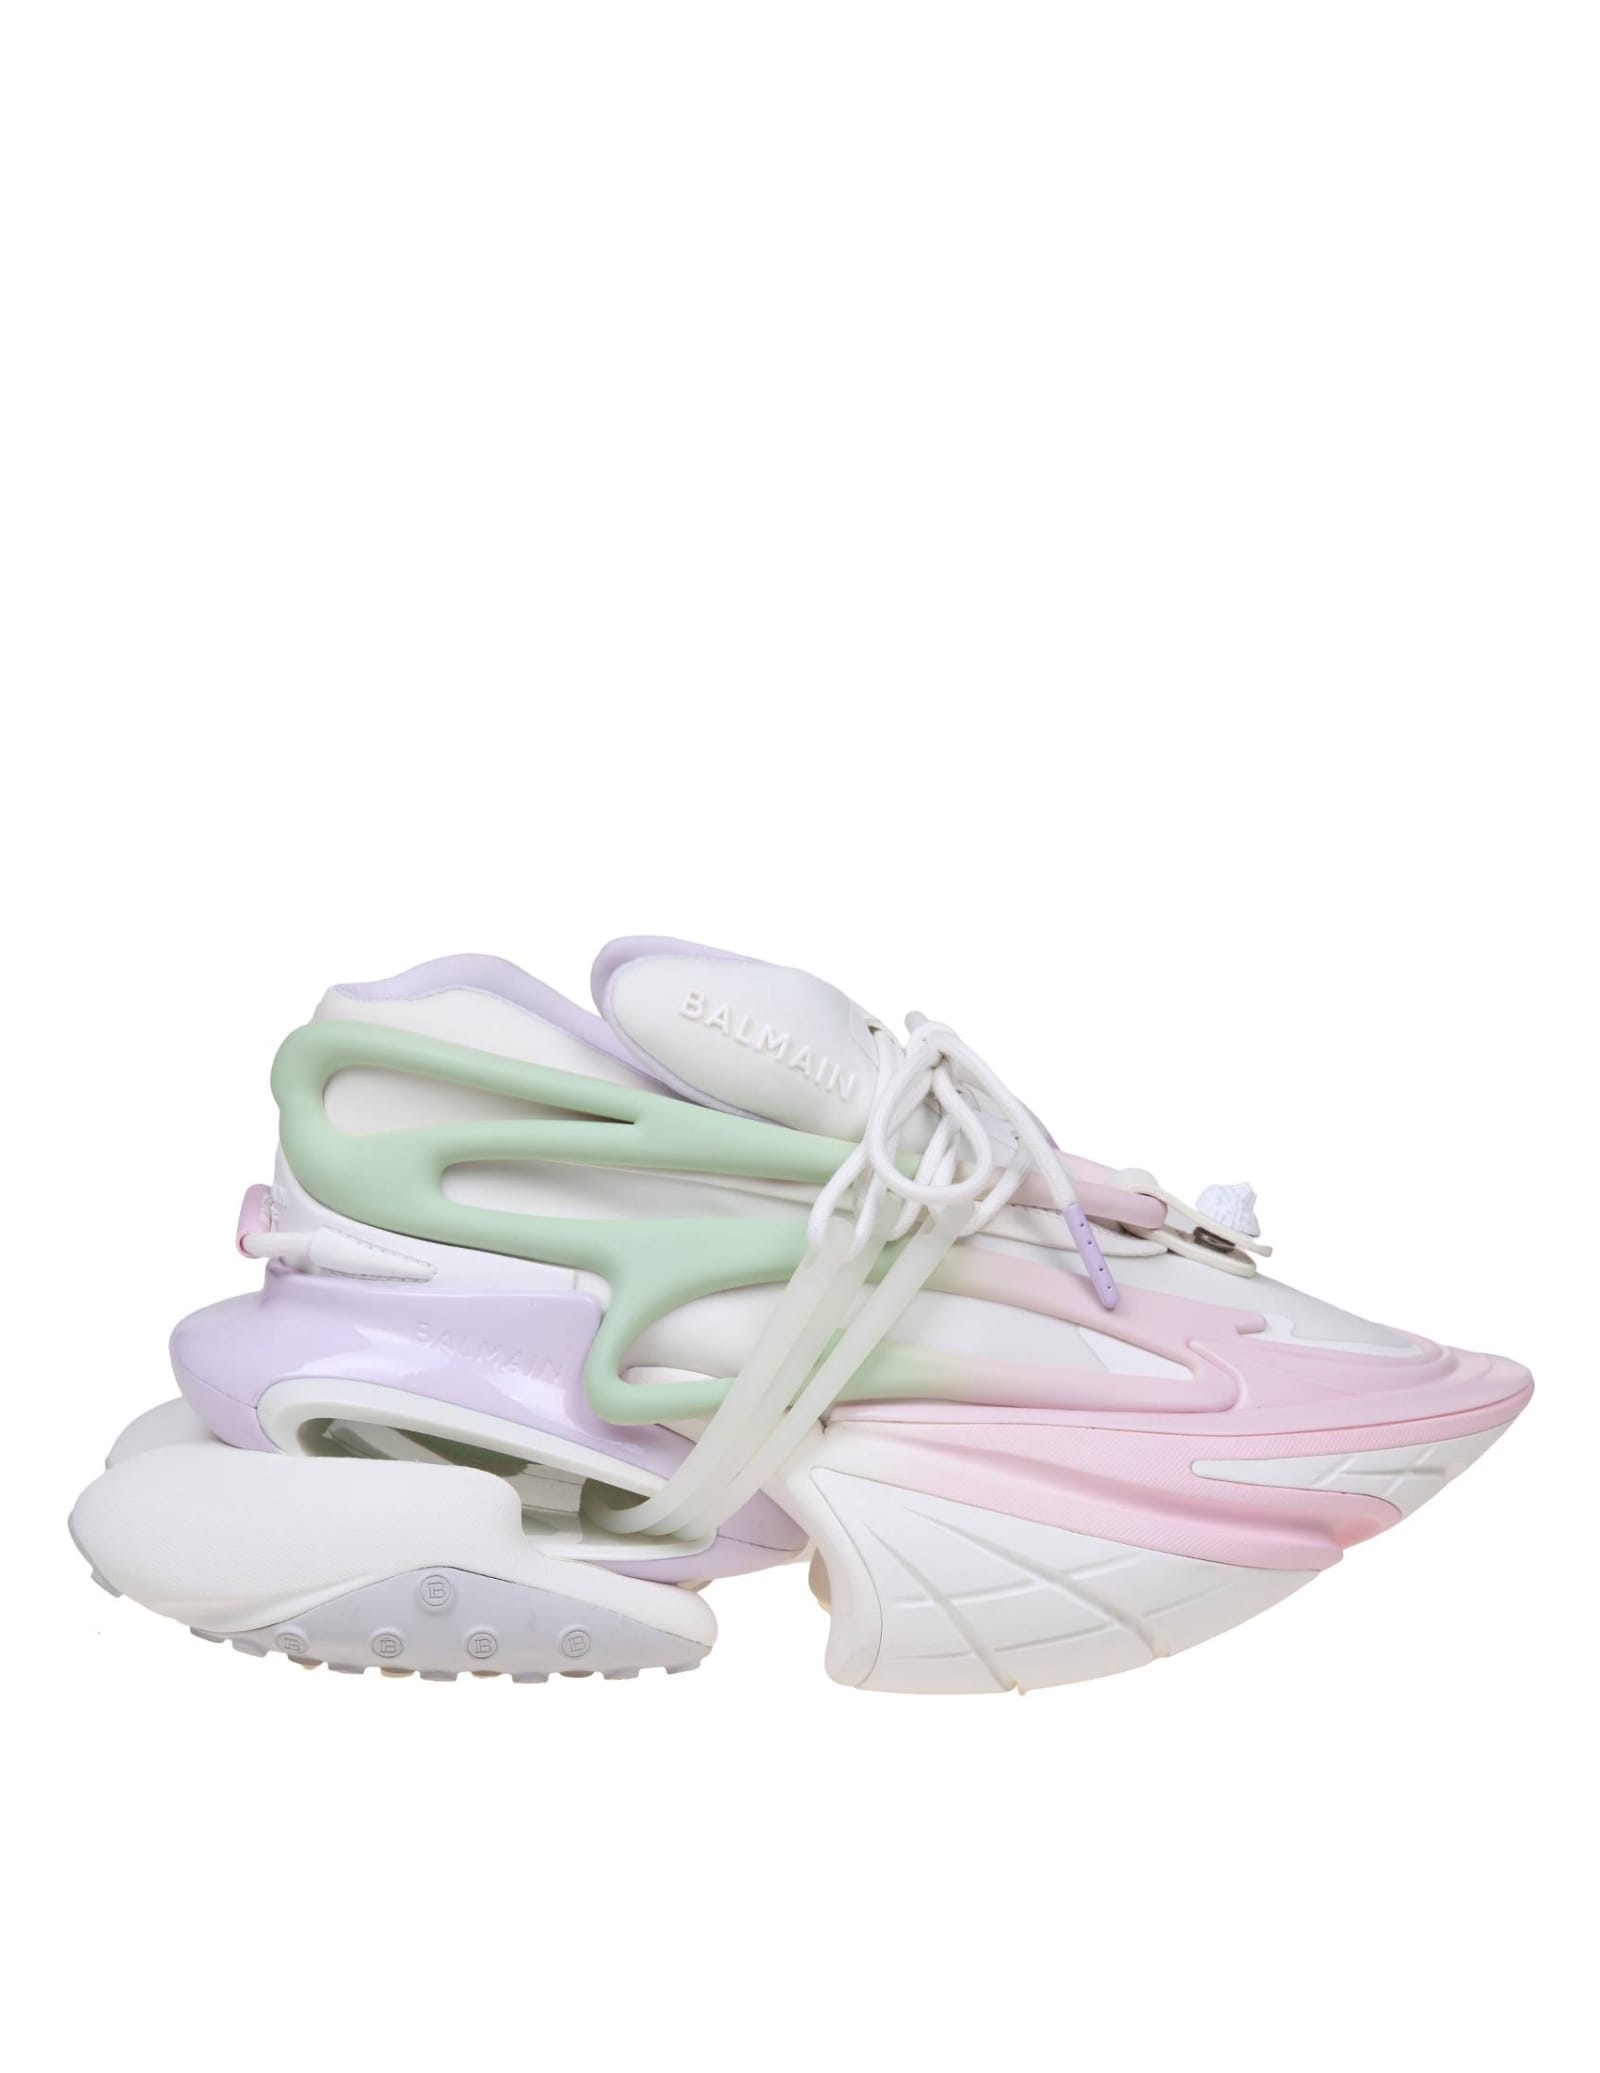 Shop Balmain Unicorn Sneakers In Multicolored Neoprene And Leather